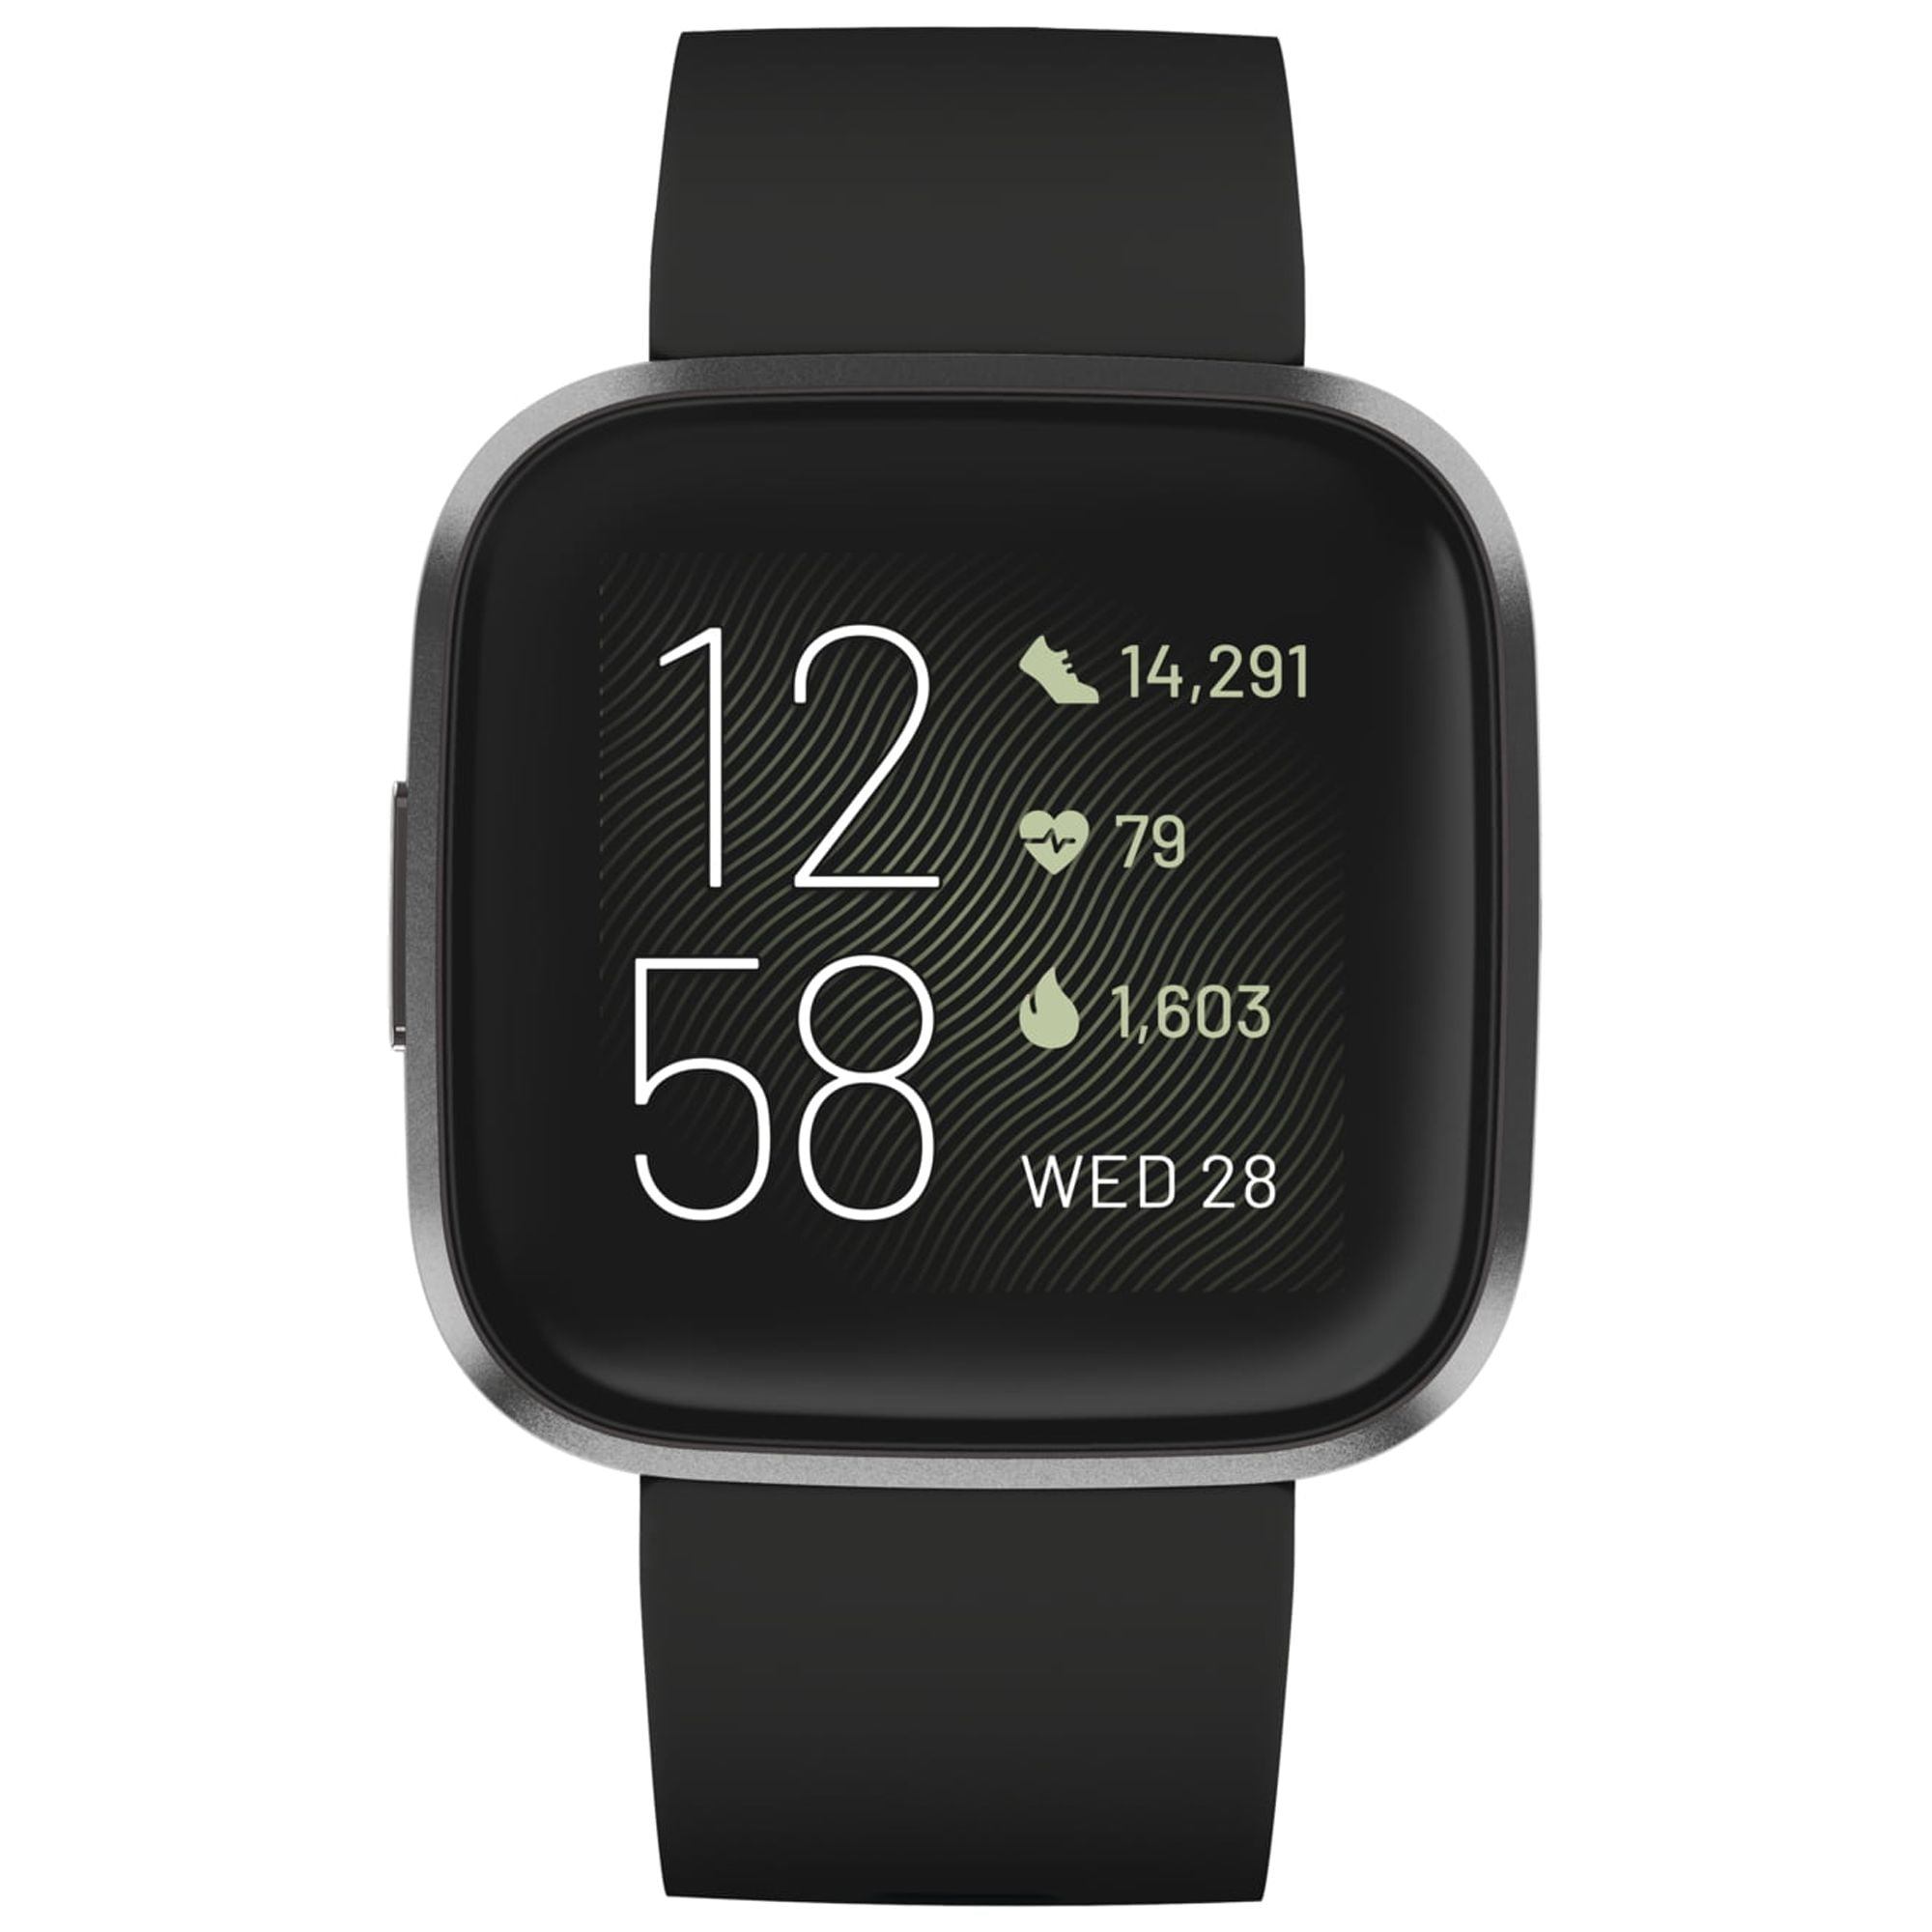 Fitbit Versa 2 Health & Fitness Smartwatch - Petal /Copper Rose Aluminum 